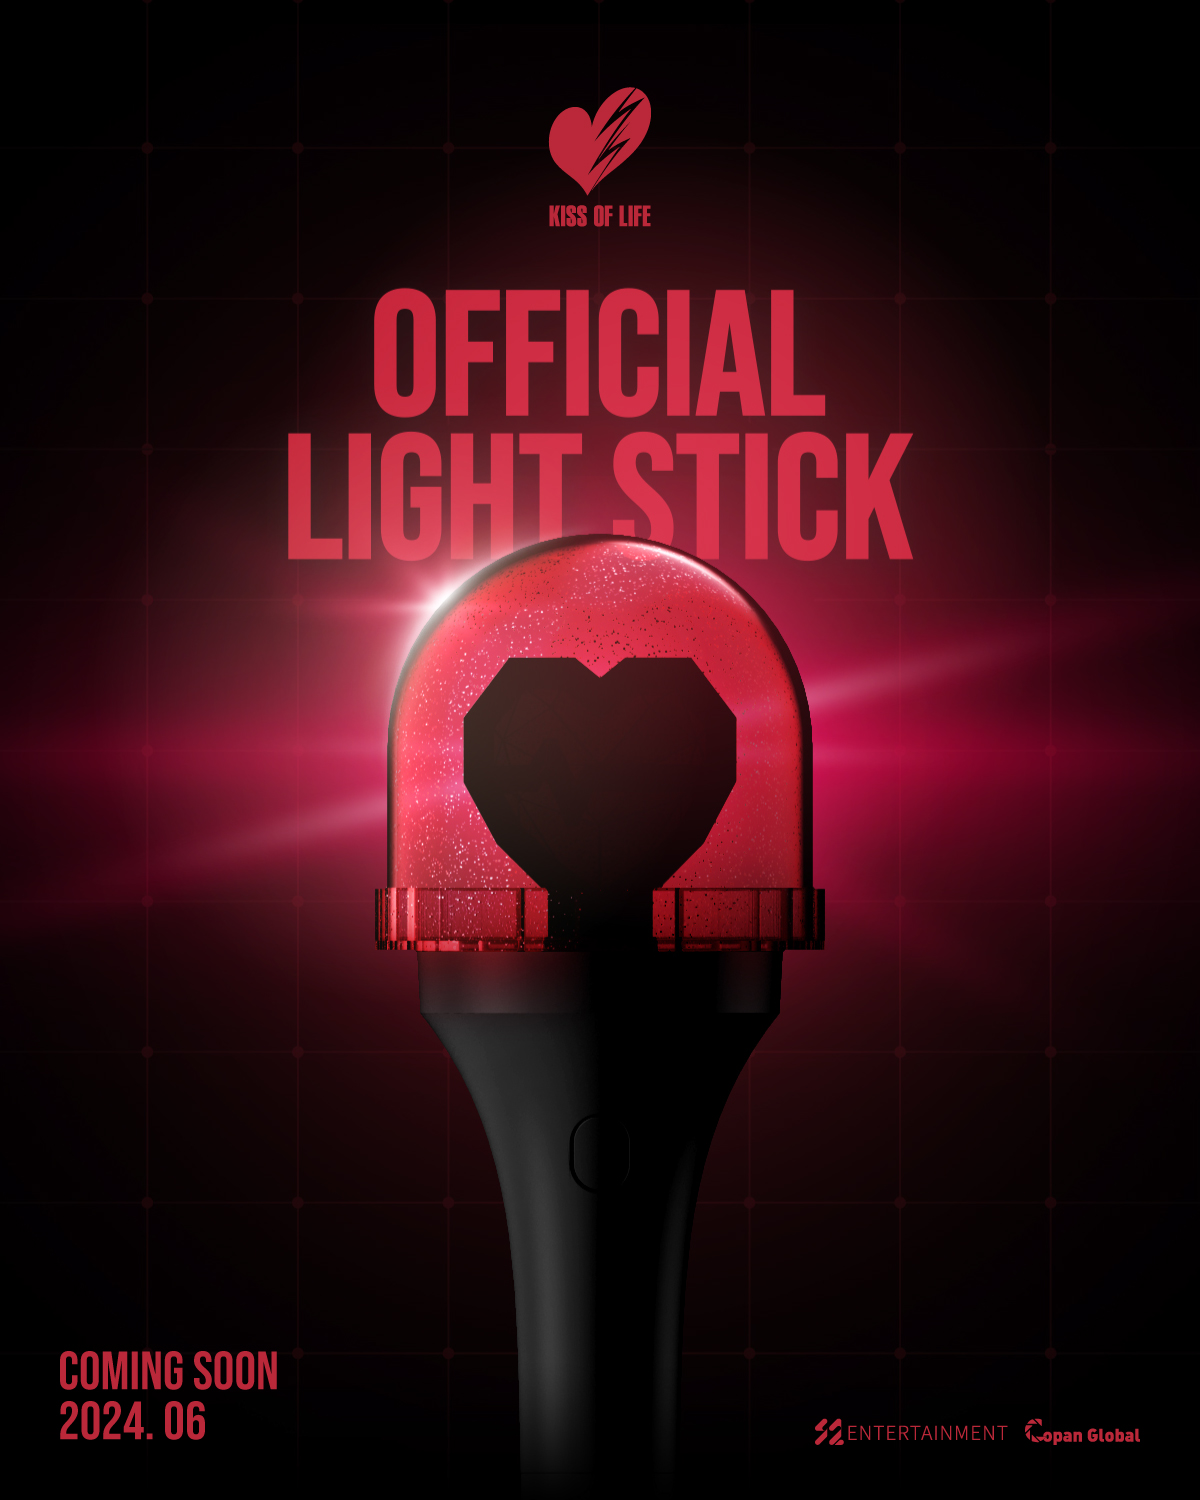 KISS OF LIFE Reveals Official Light Stick